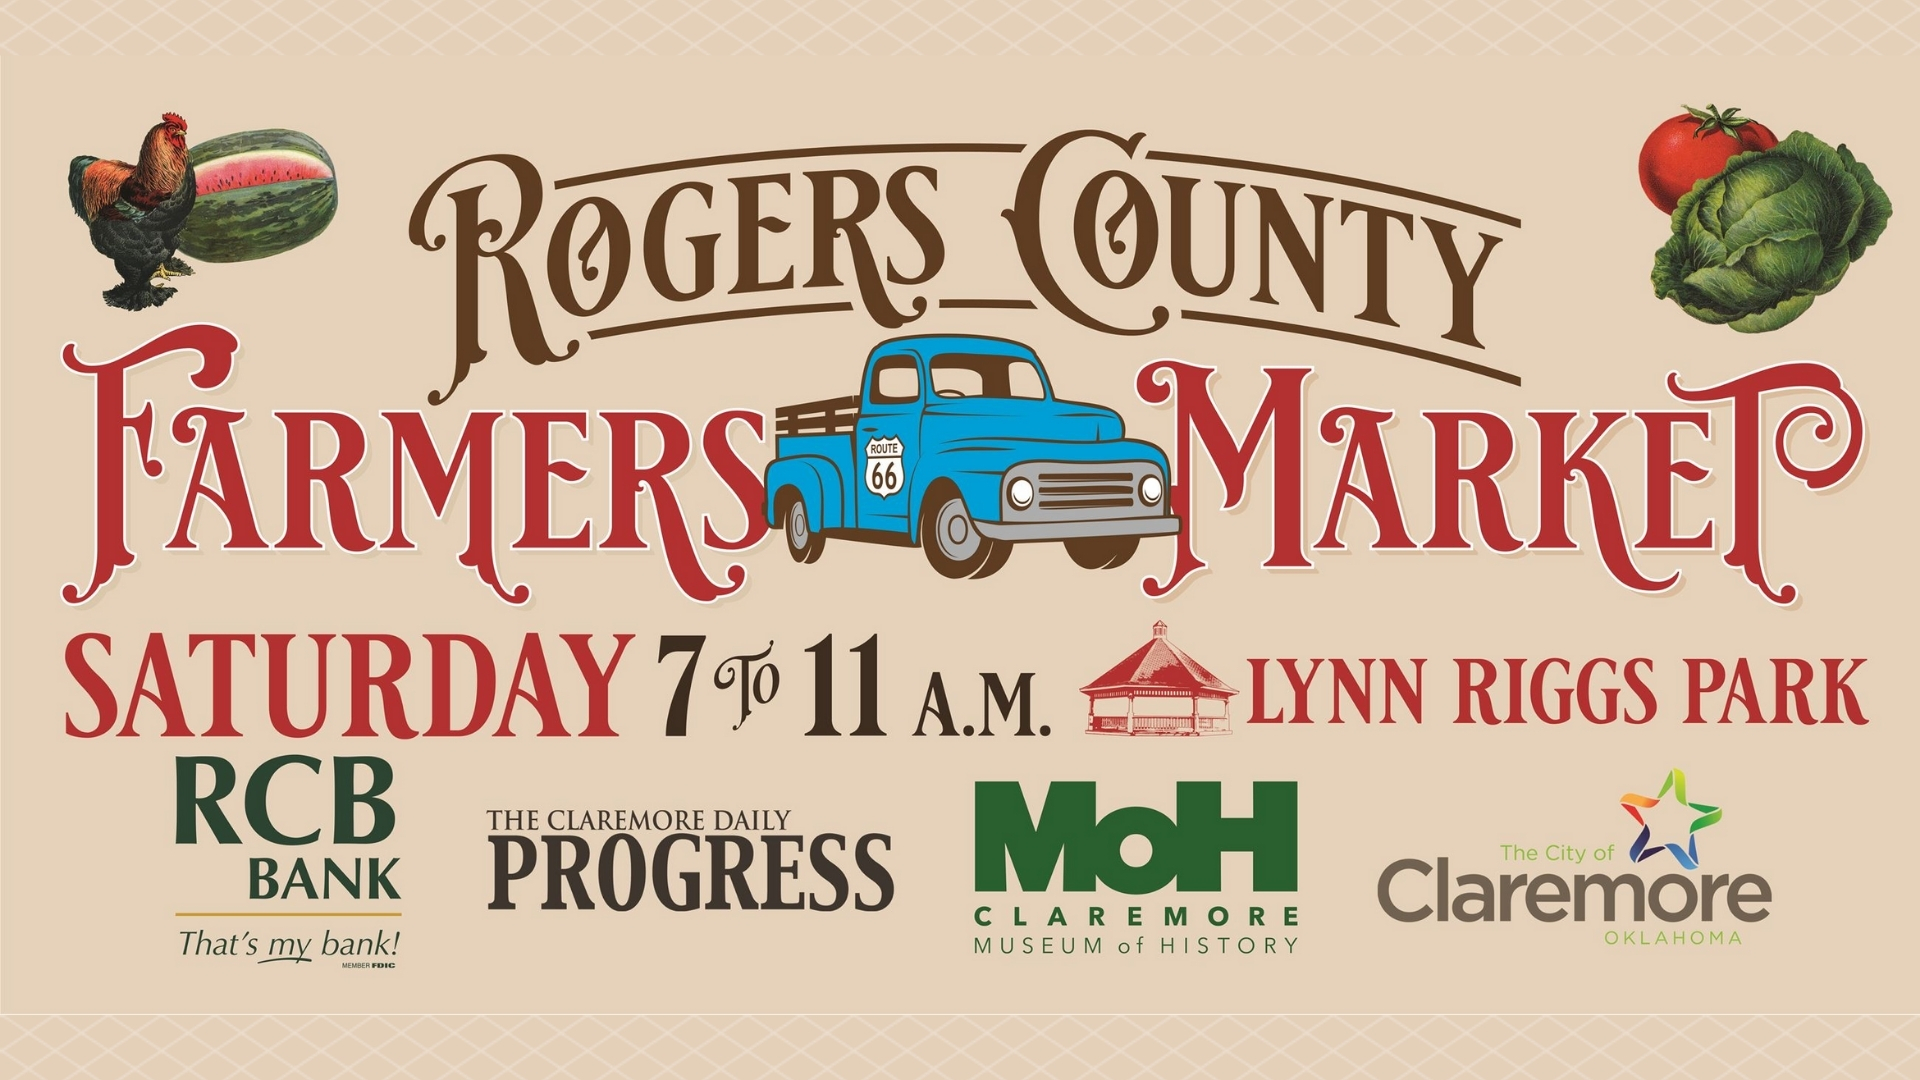 Rogers County Farmers’ Market